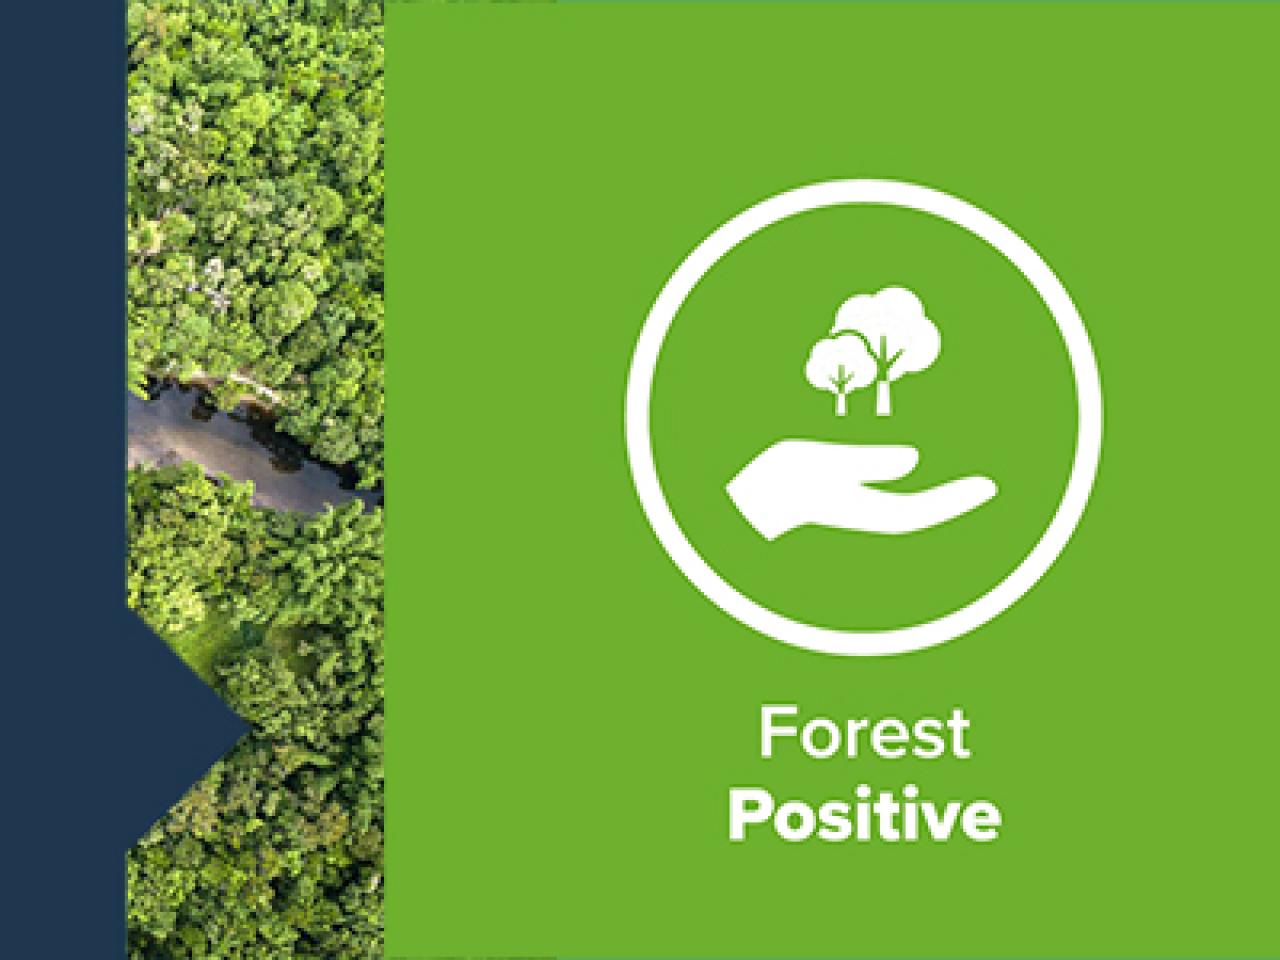 "Forest Positive" logo